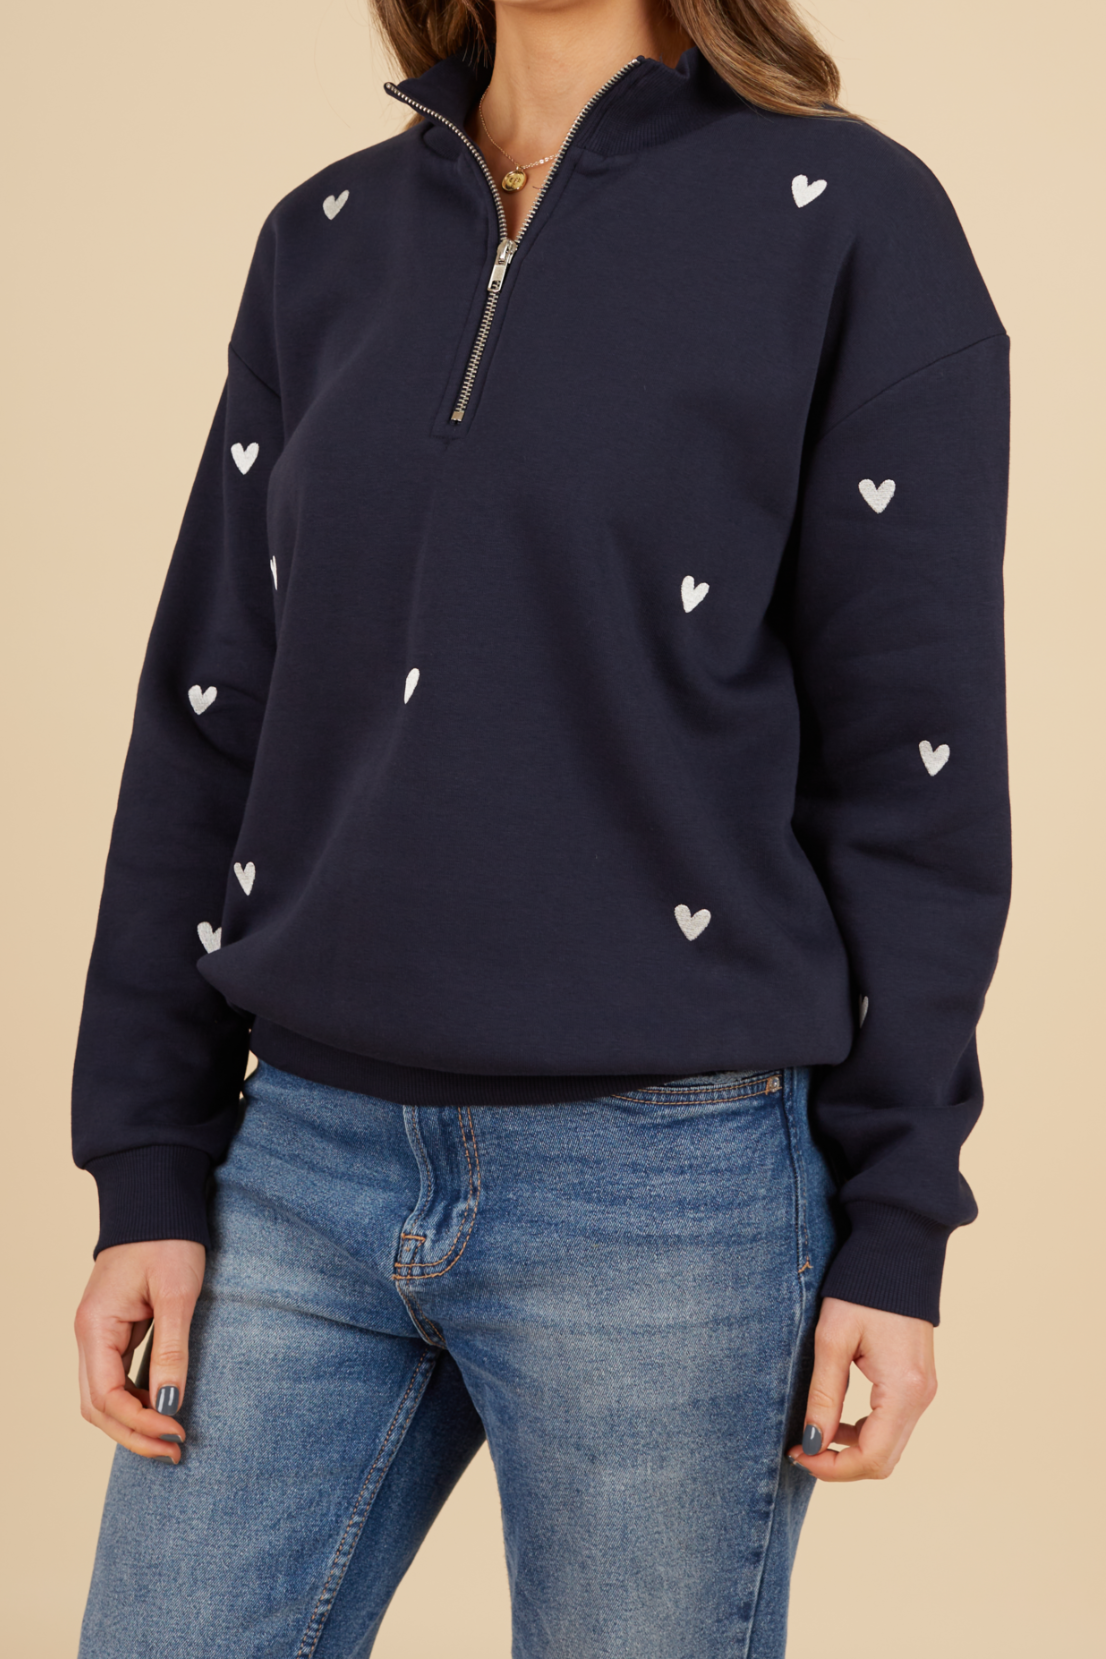 O&F Navy Heart Embroidered Quarter Zip Sweatshirt